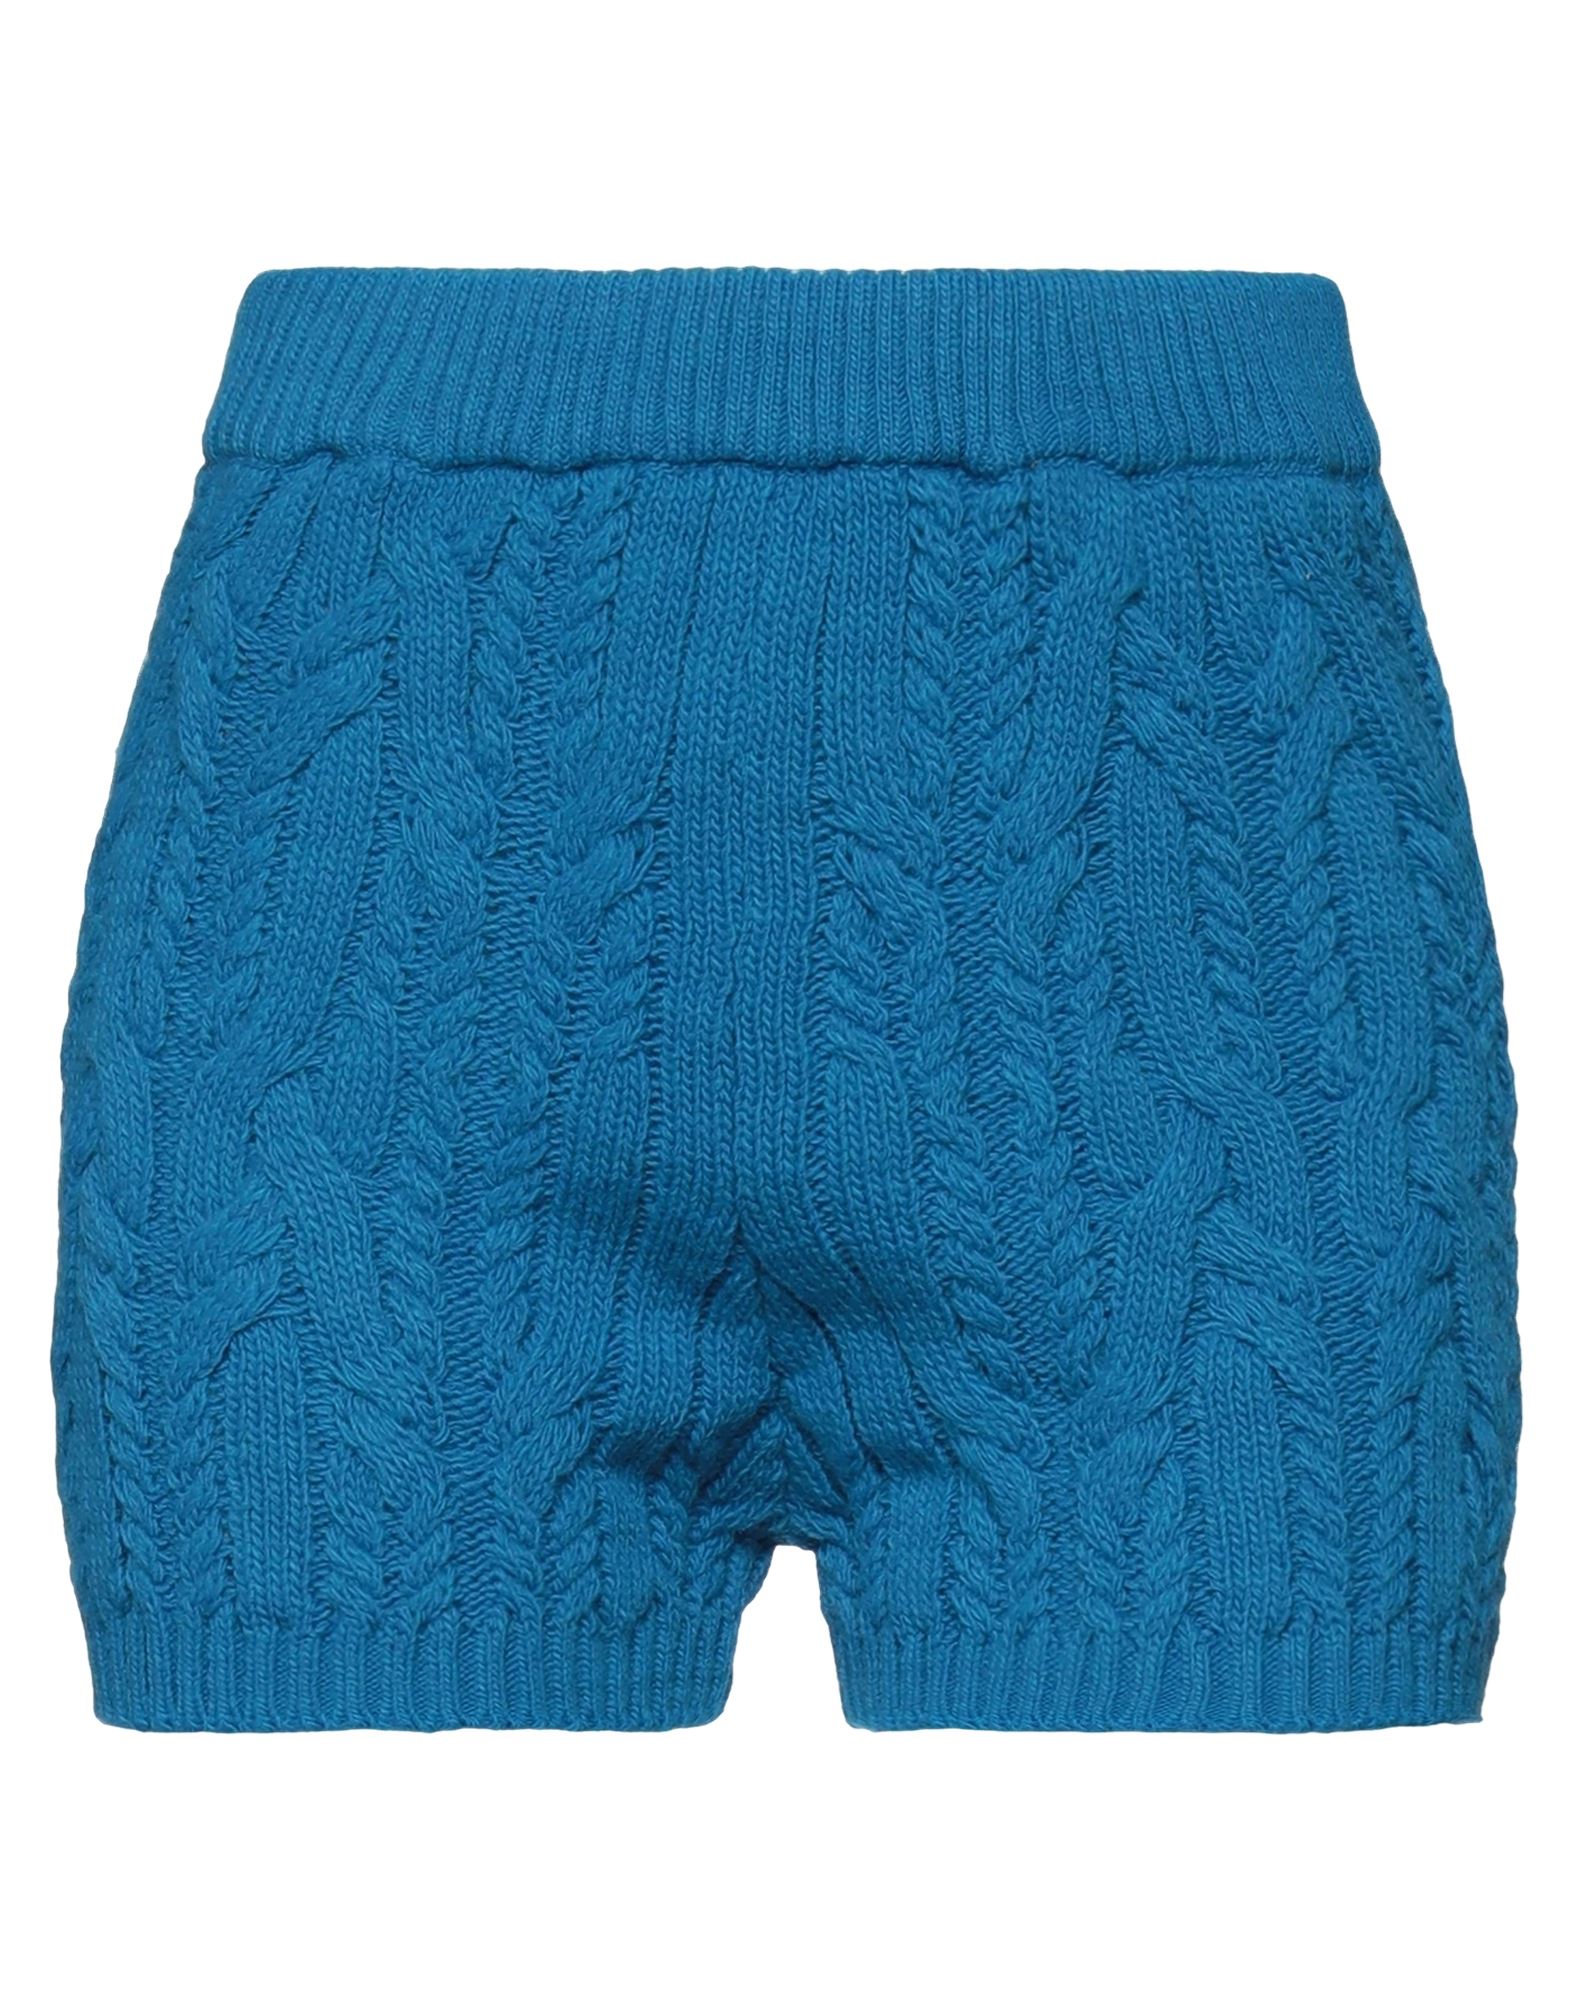 KAOS JEANS Shorts & Bermudashorts Damen Azurblau von KAOS JEANS